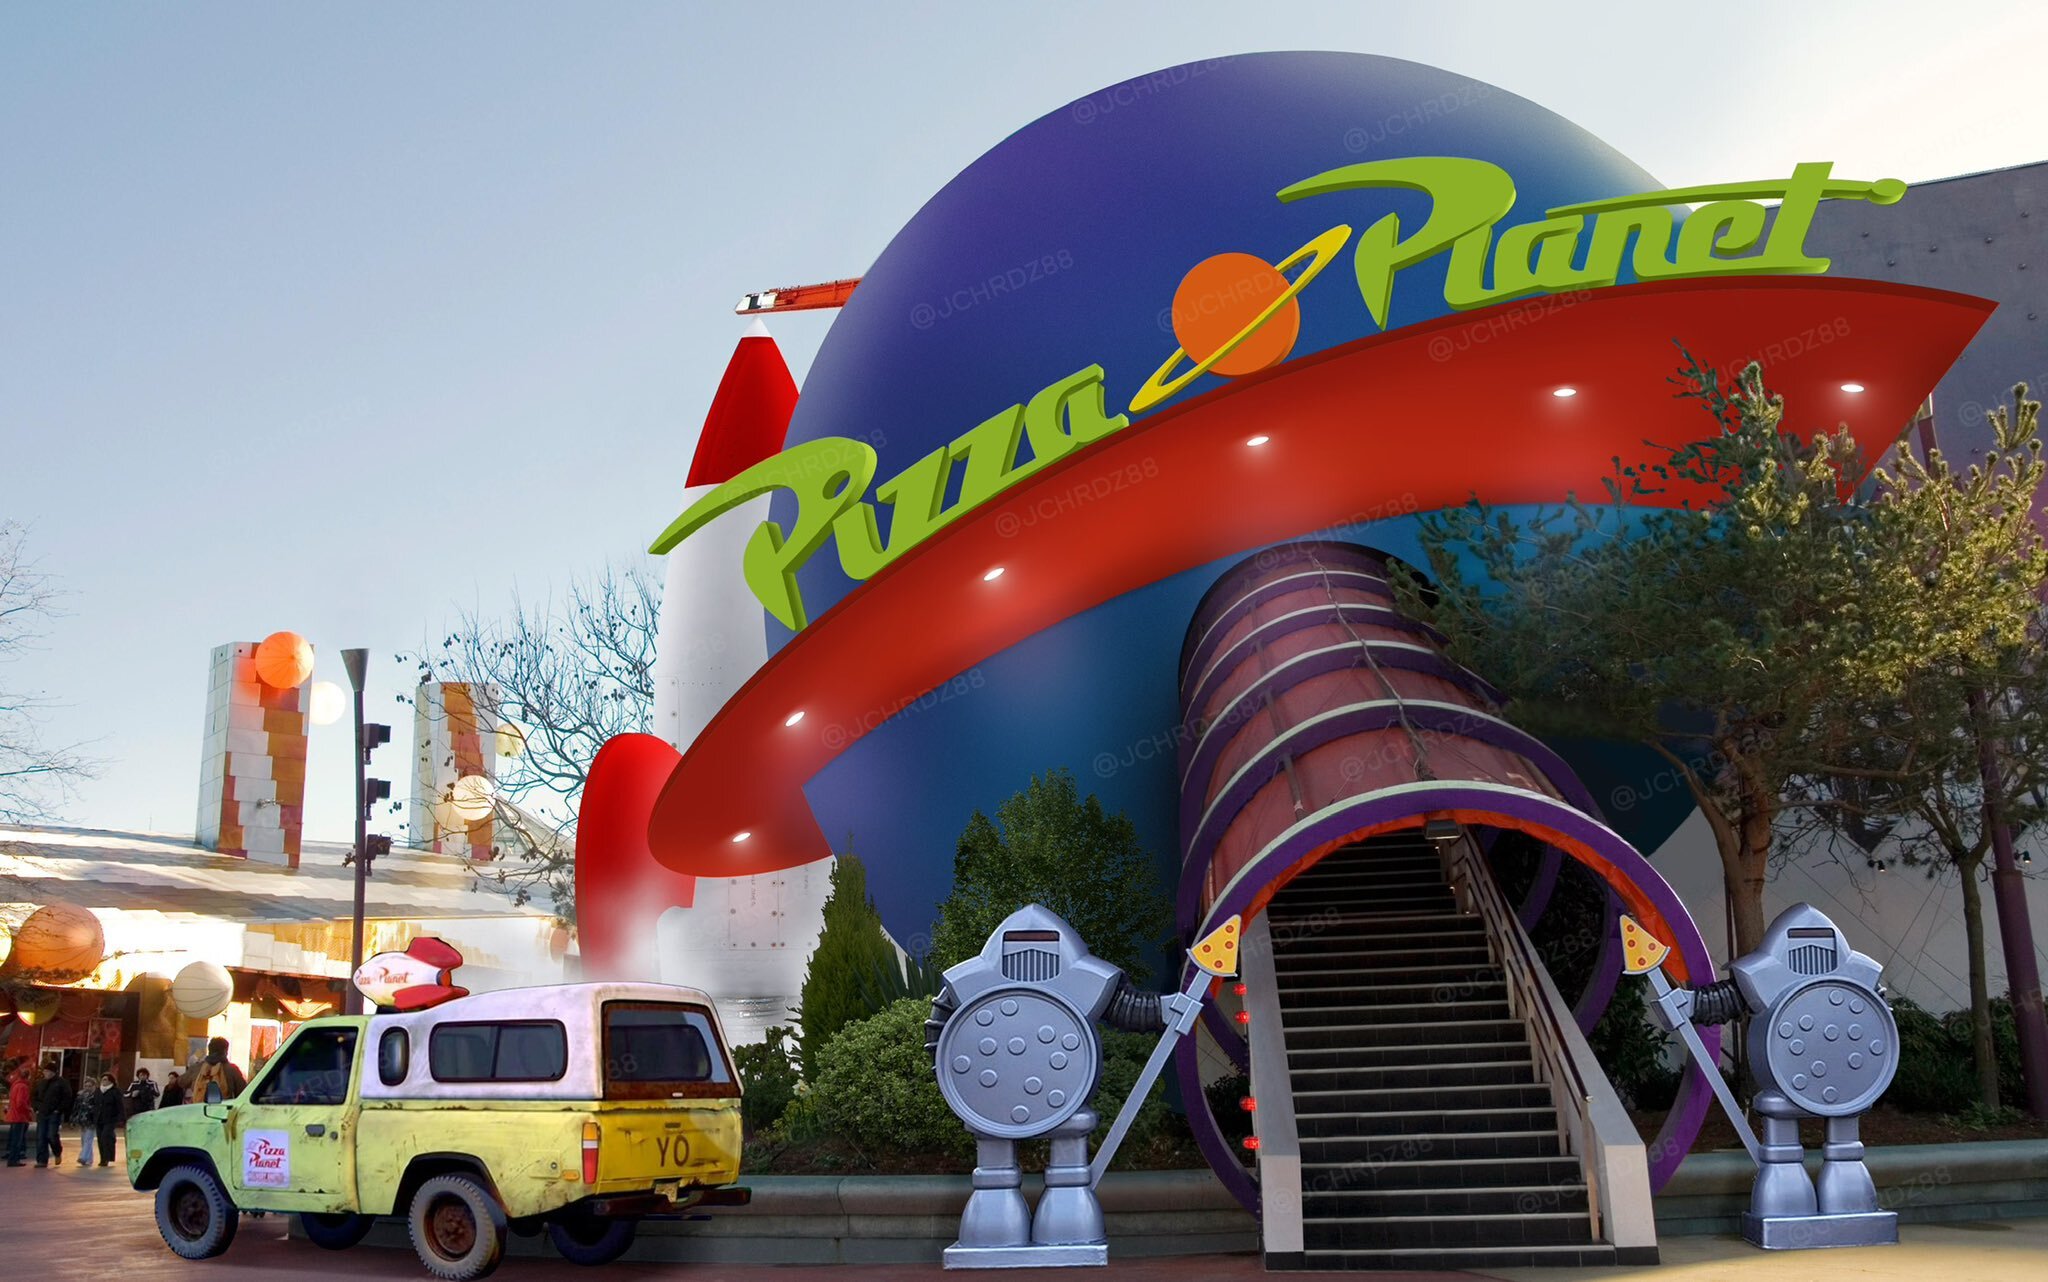 Planet Hollywood (Disney Village) fermeture définitive 7 Janvier 2023 - Page 11 V4ph